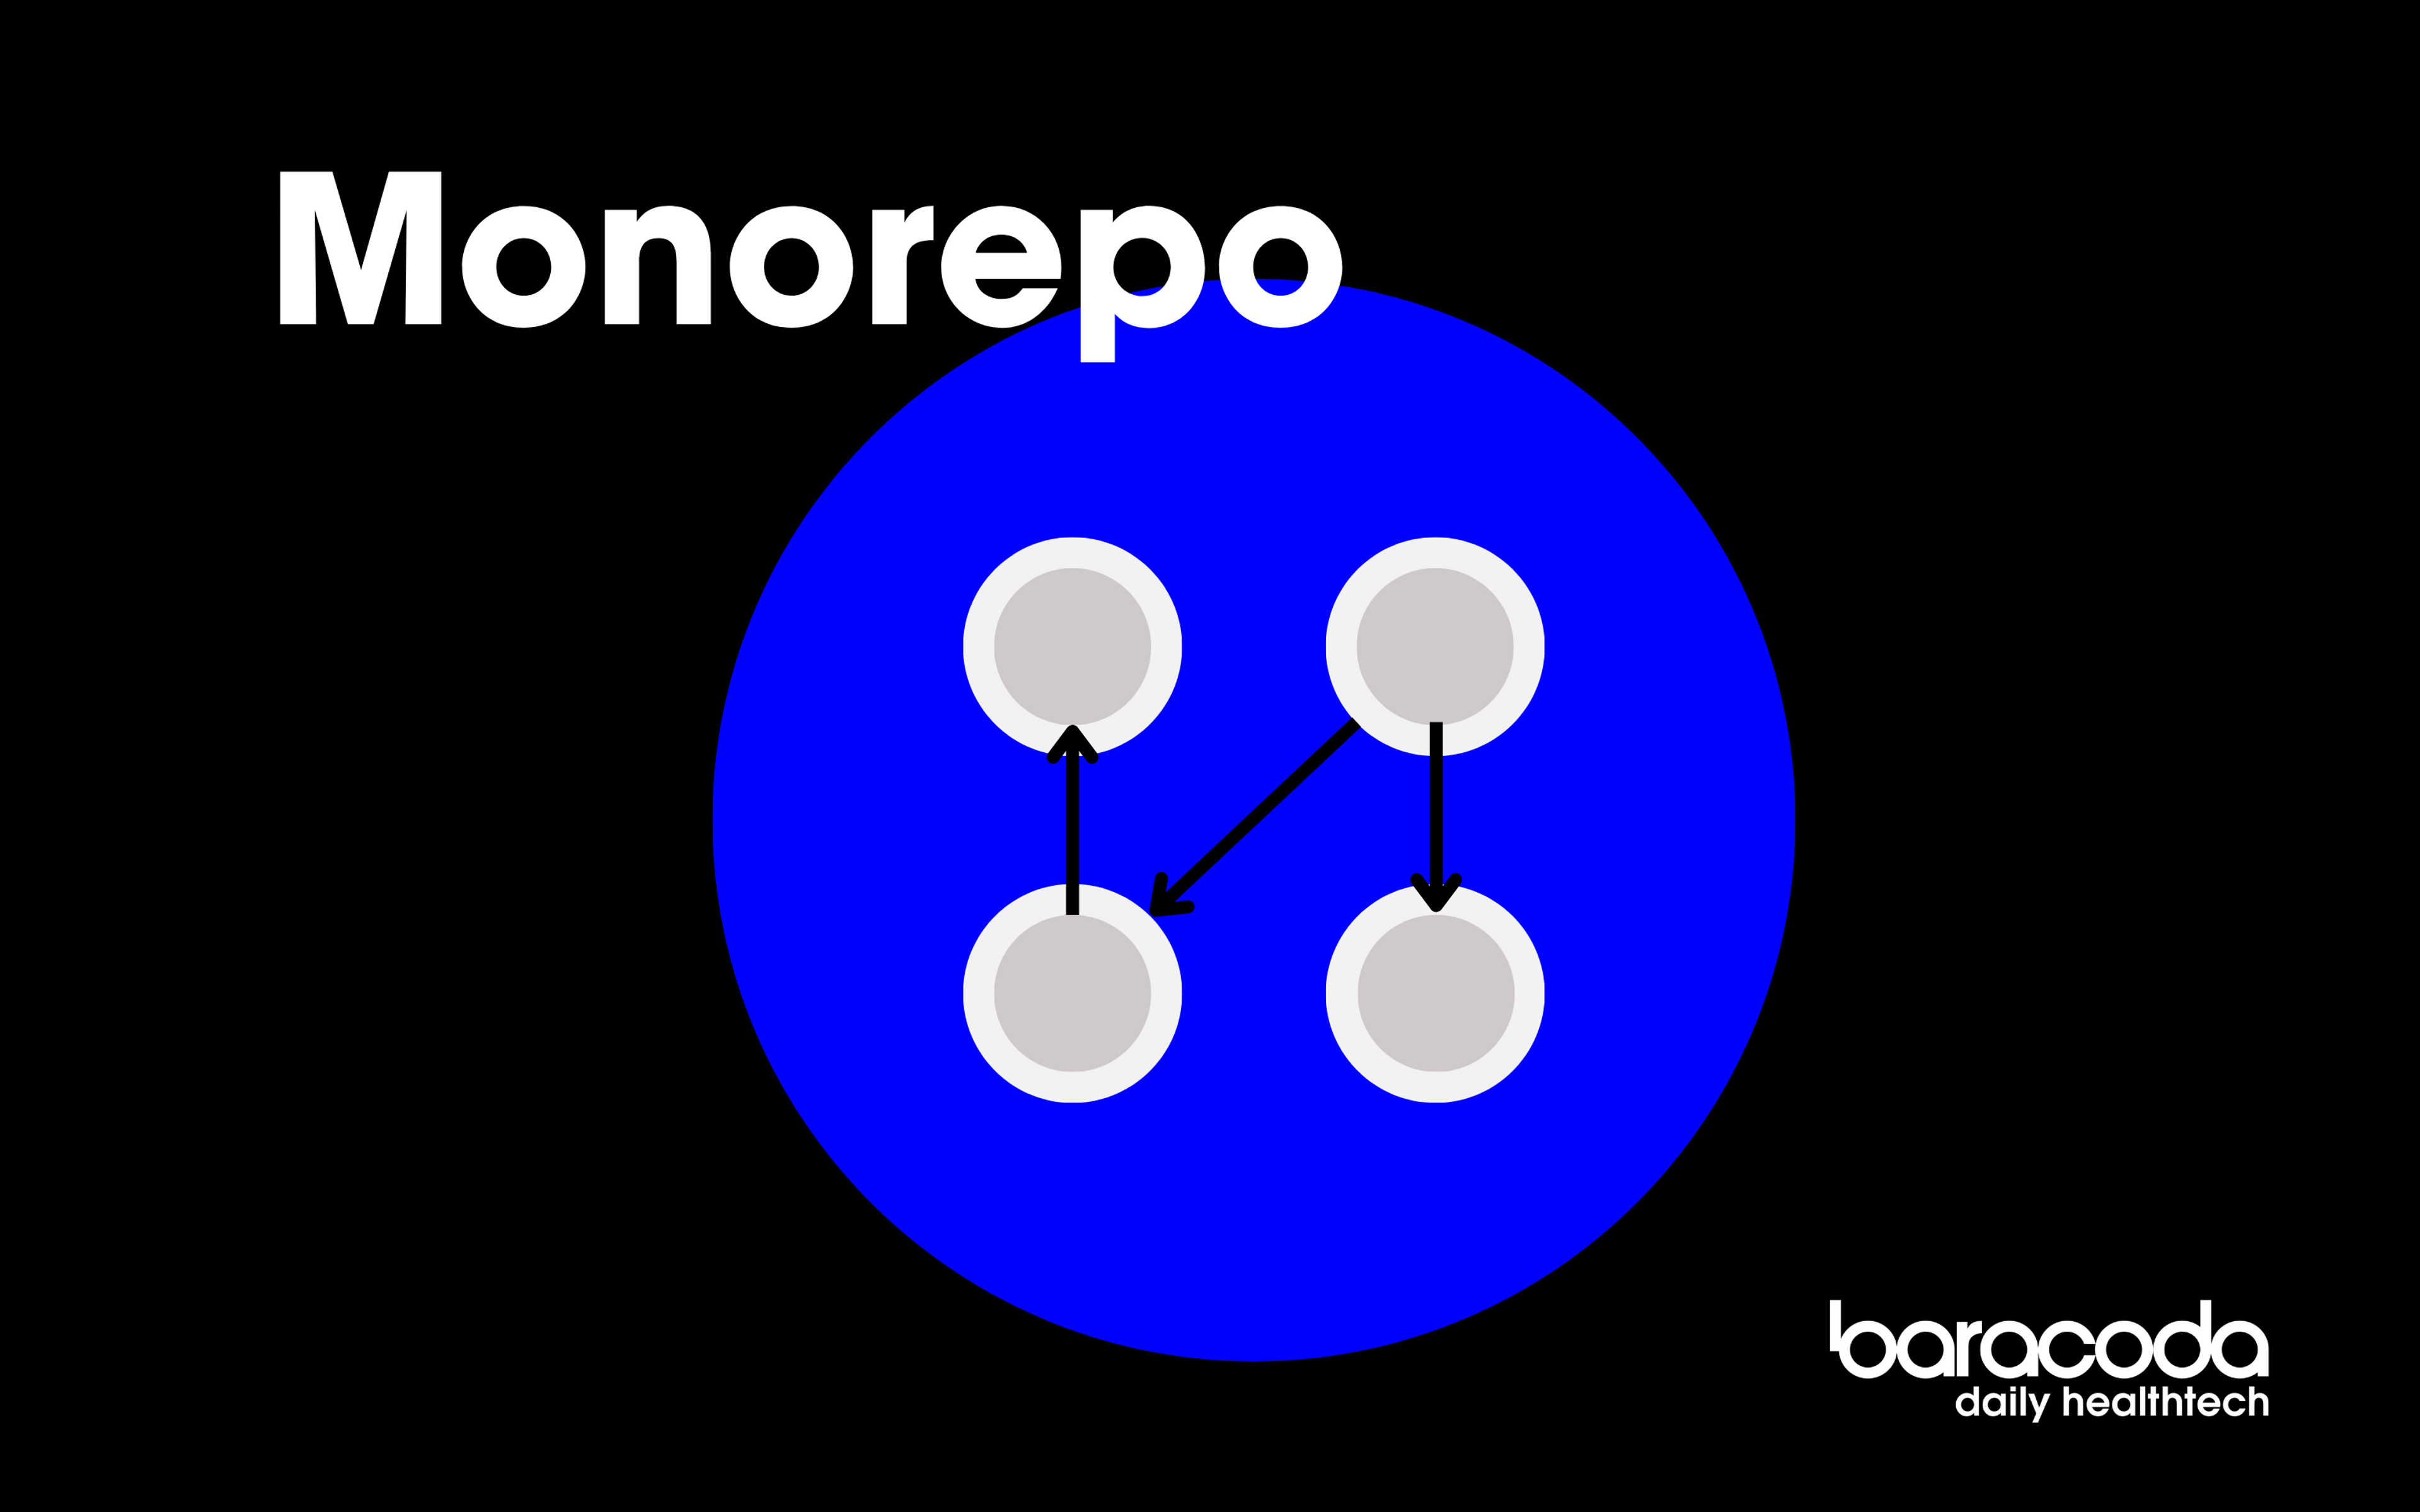 Monorepo by Baracoda